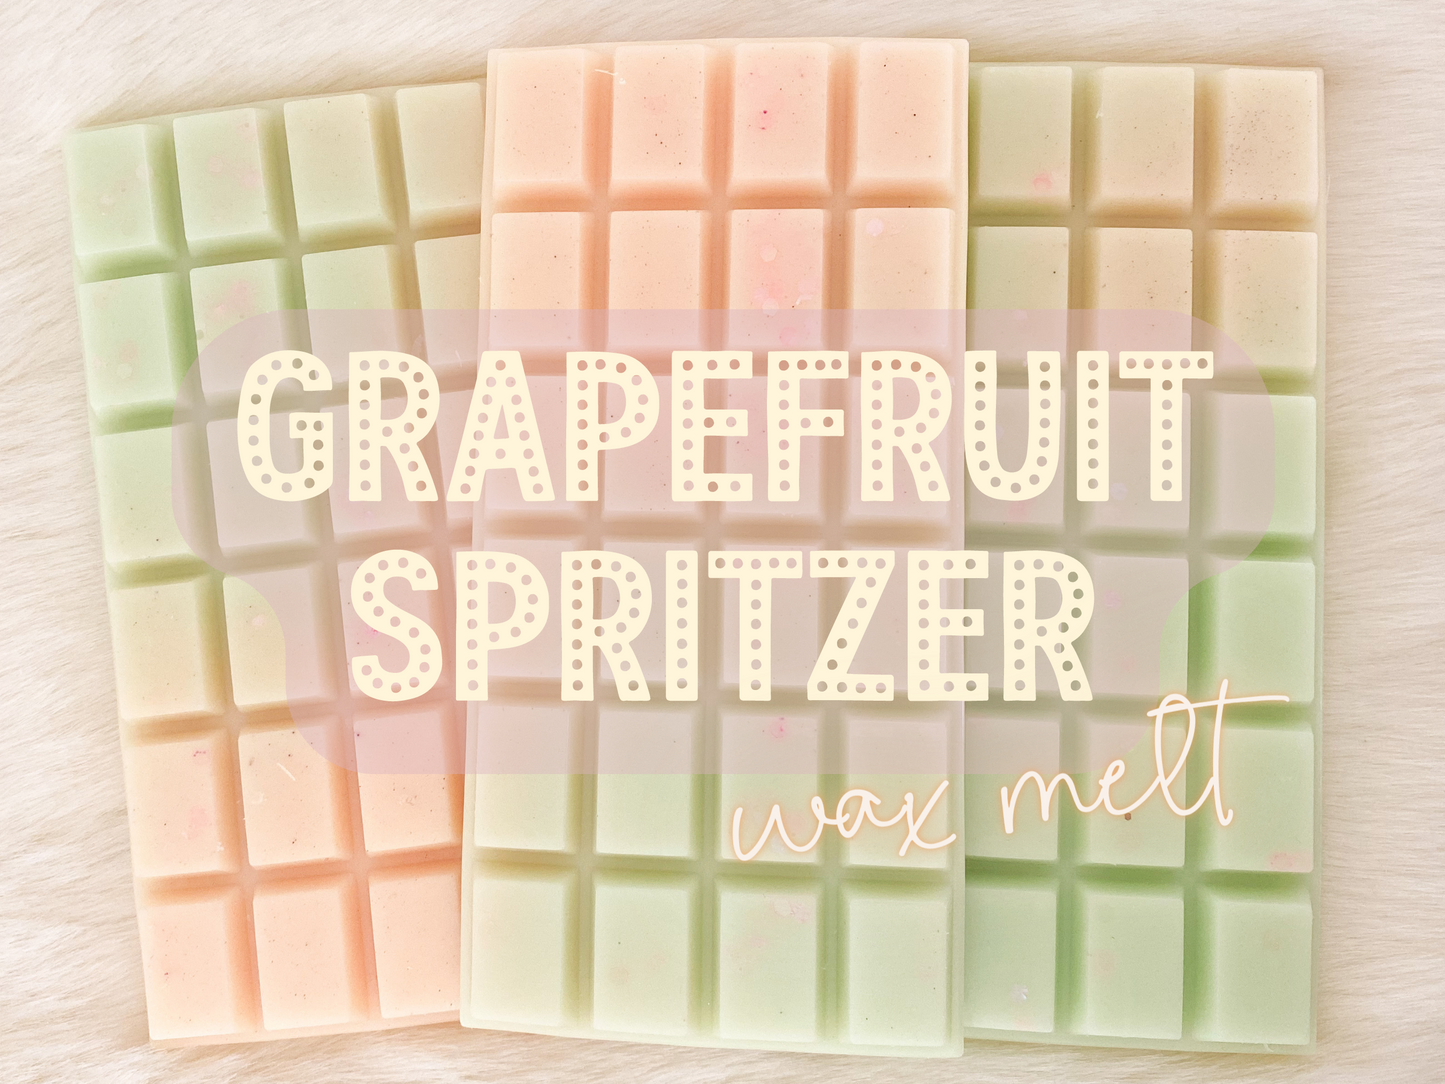 Grapefruit Spritzer Snap Bar